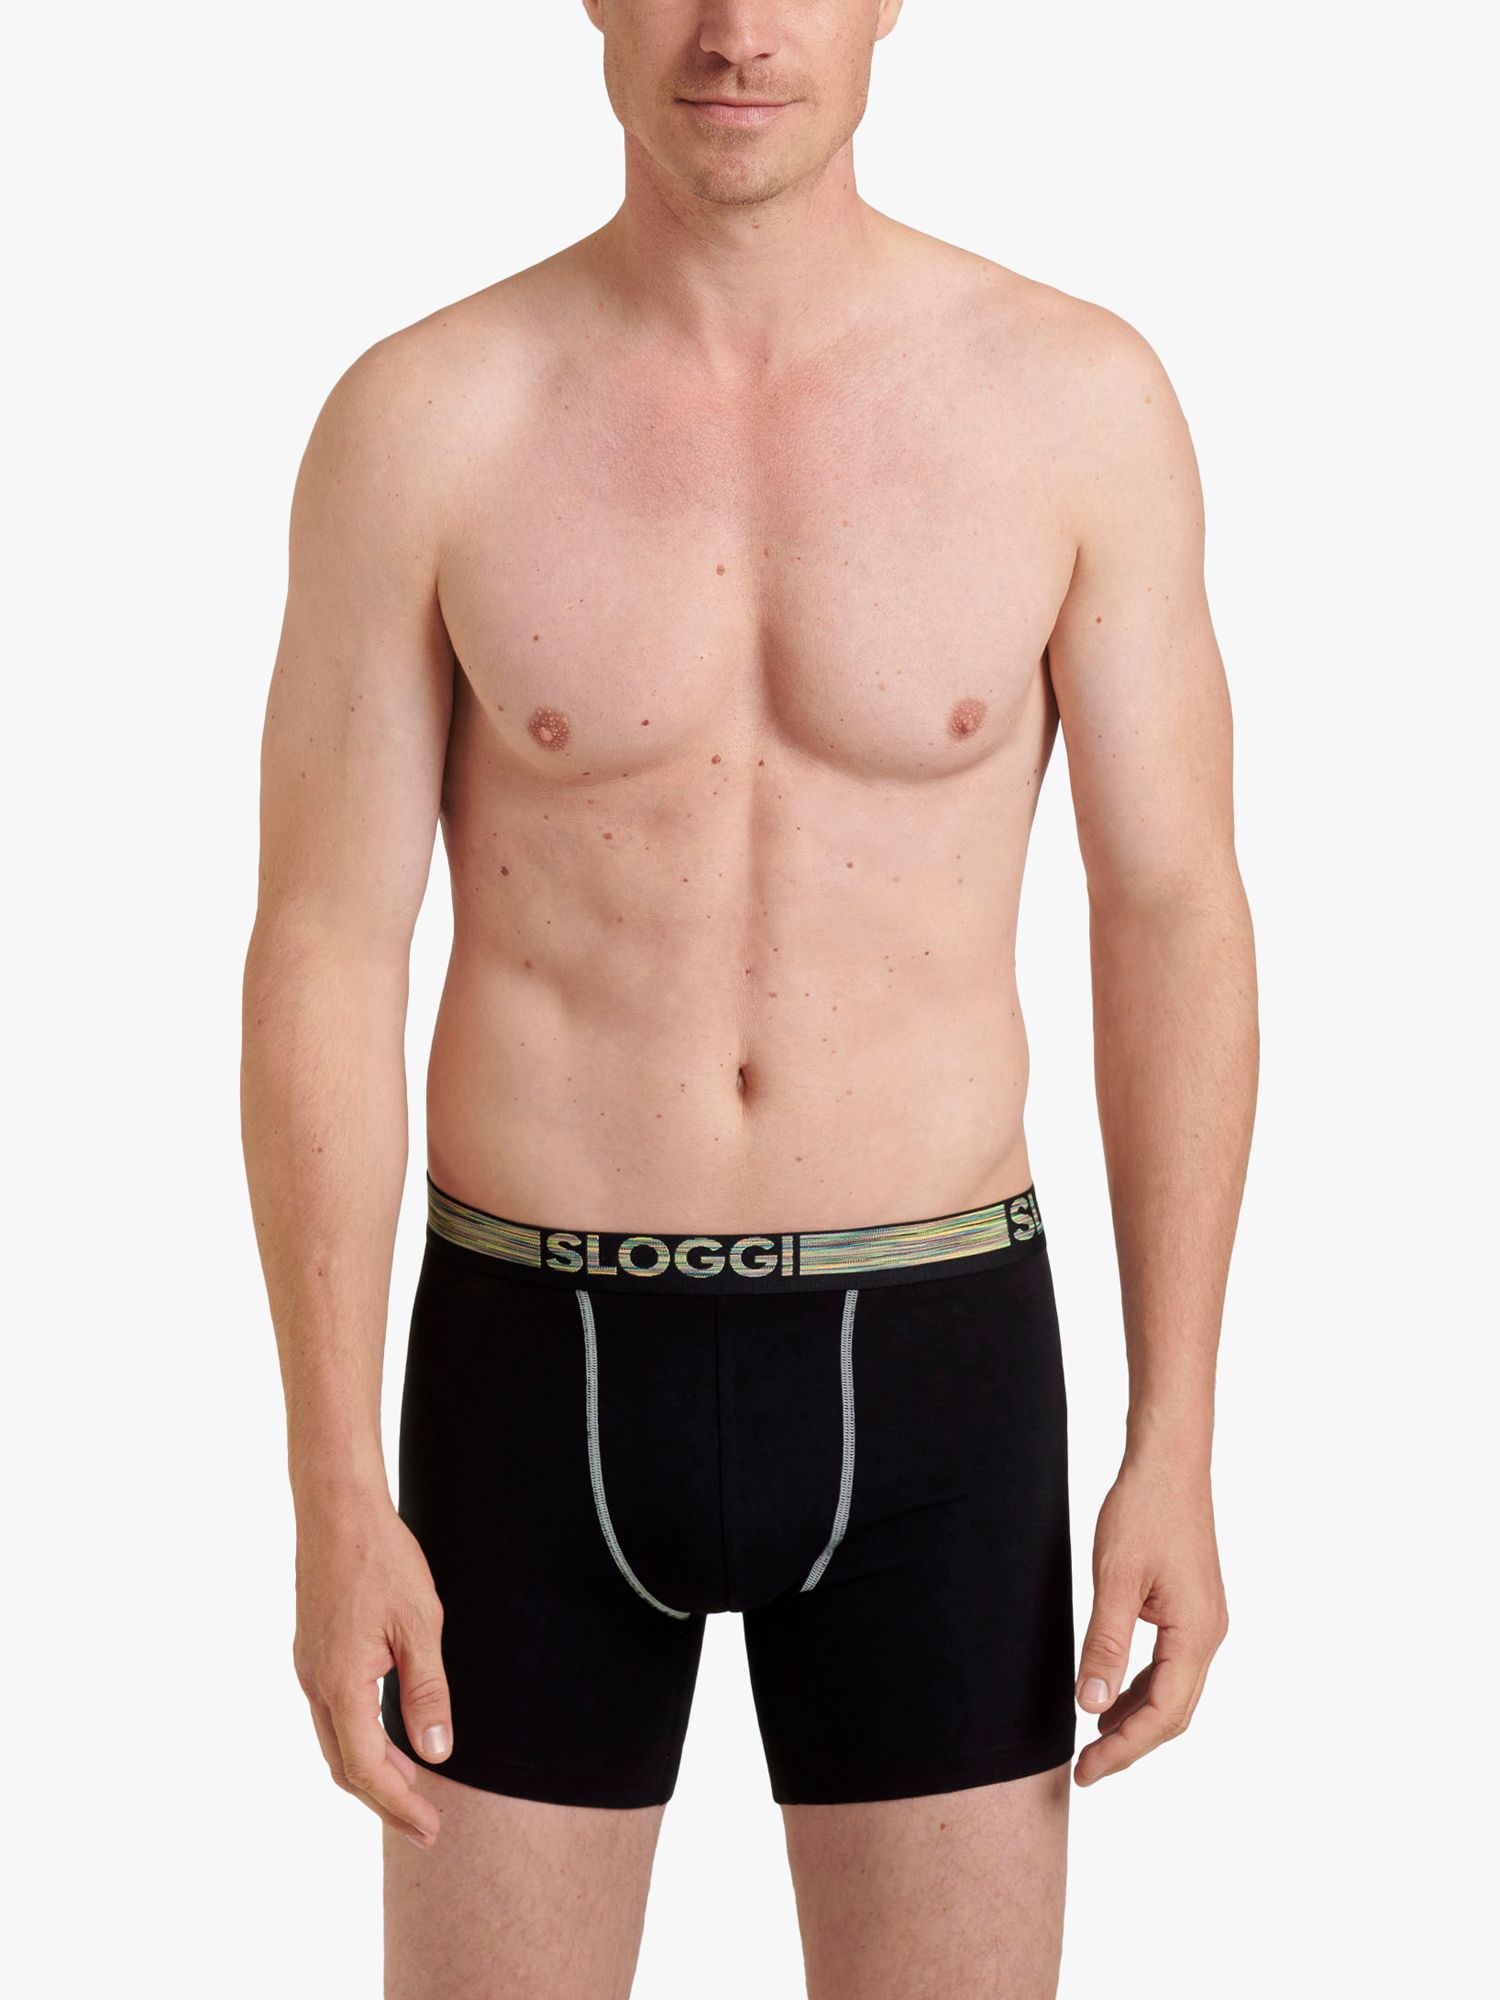 Sloggi Men, tight underwear at DDO